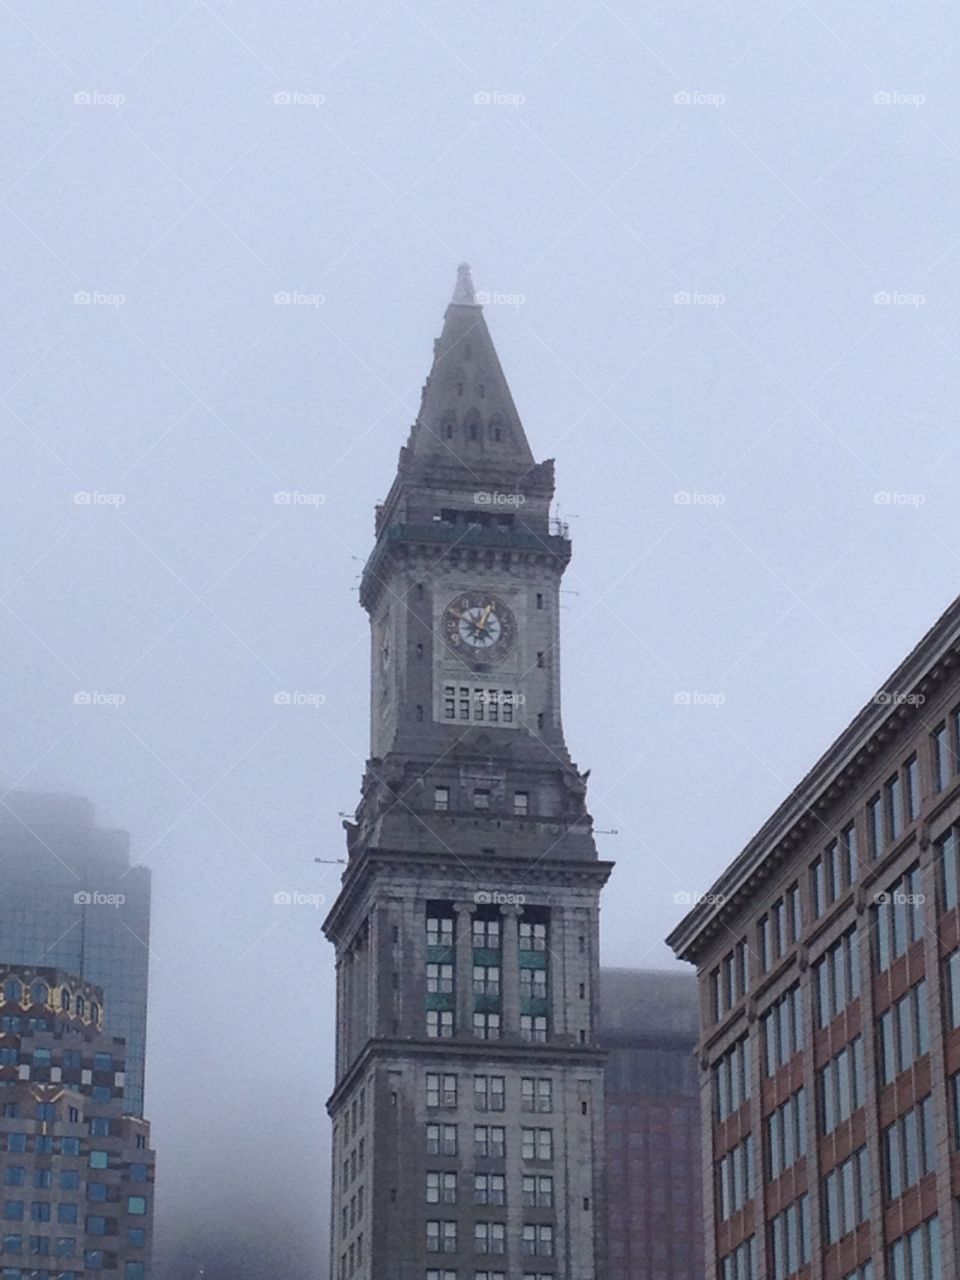 Foggy clock tower in Boston